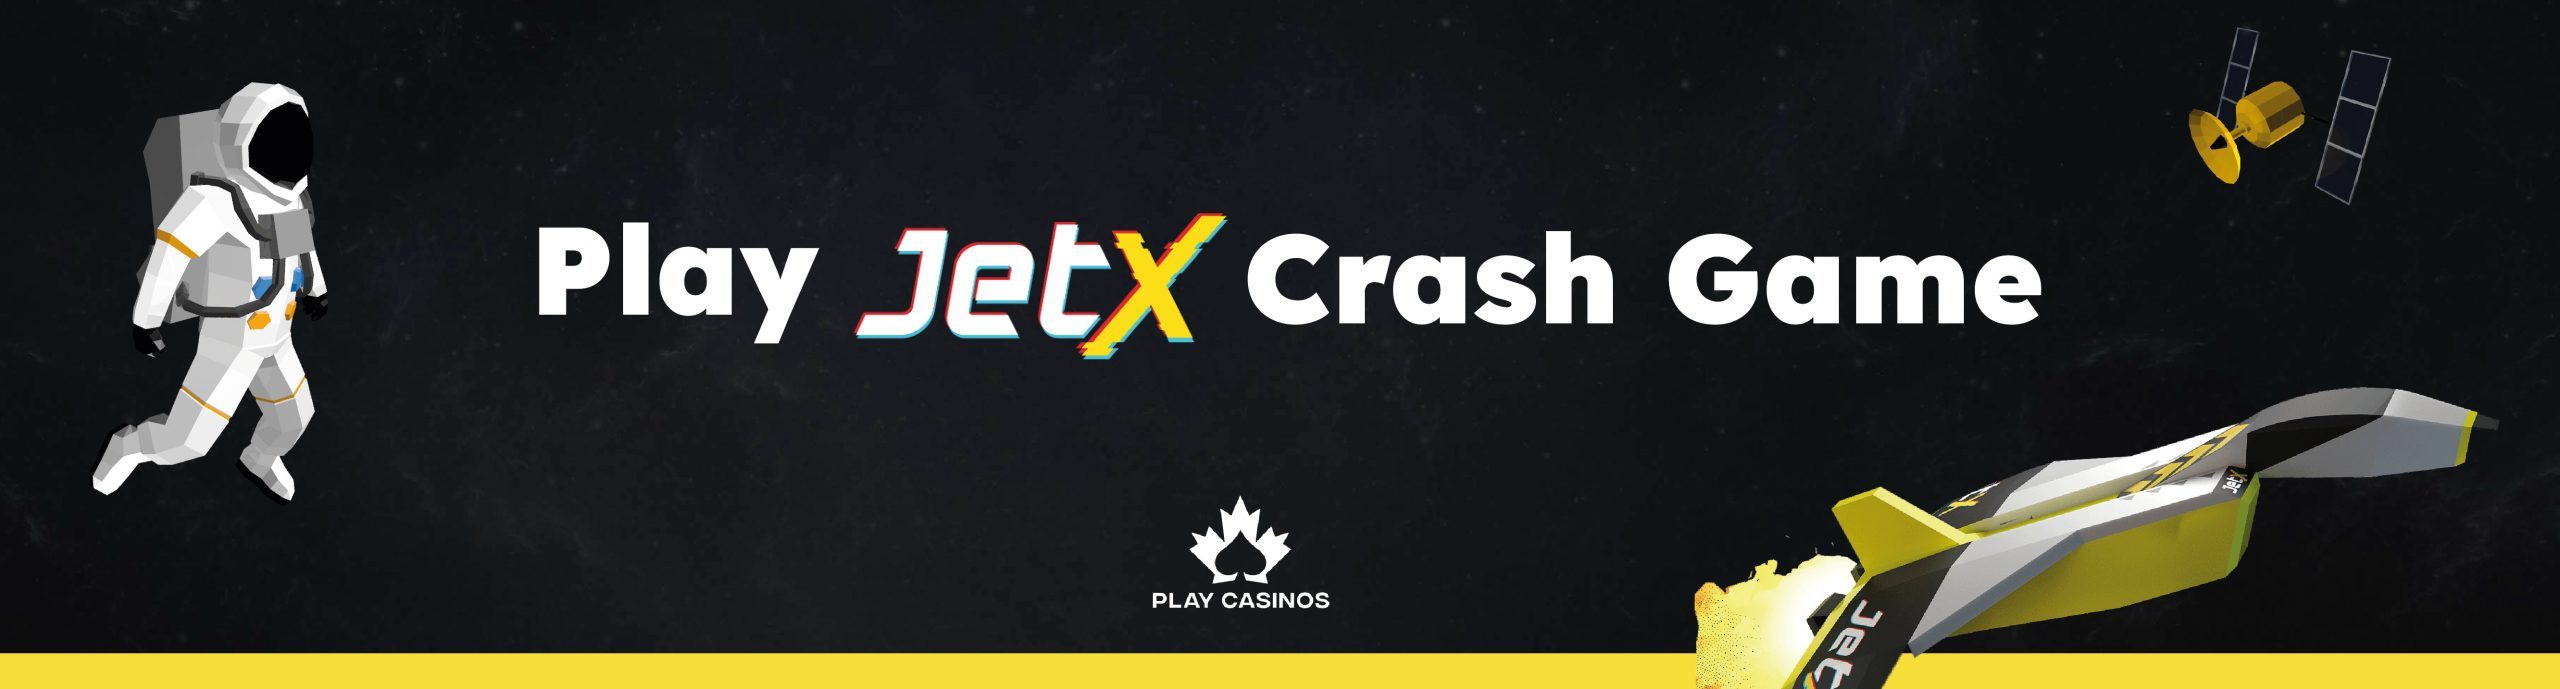 Play JetX Crash Game